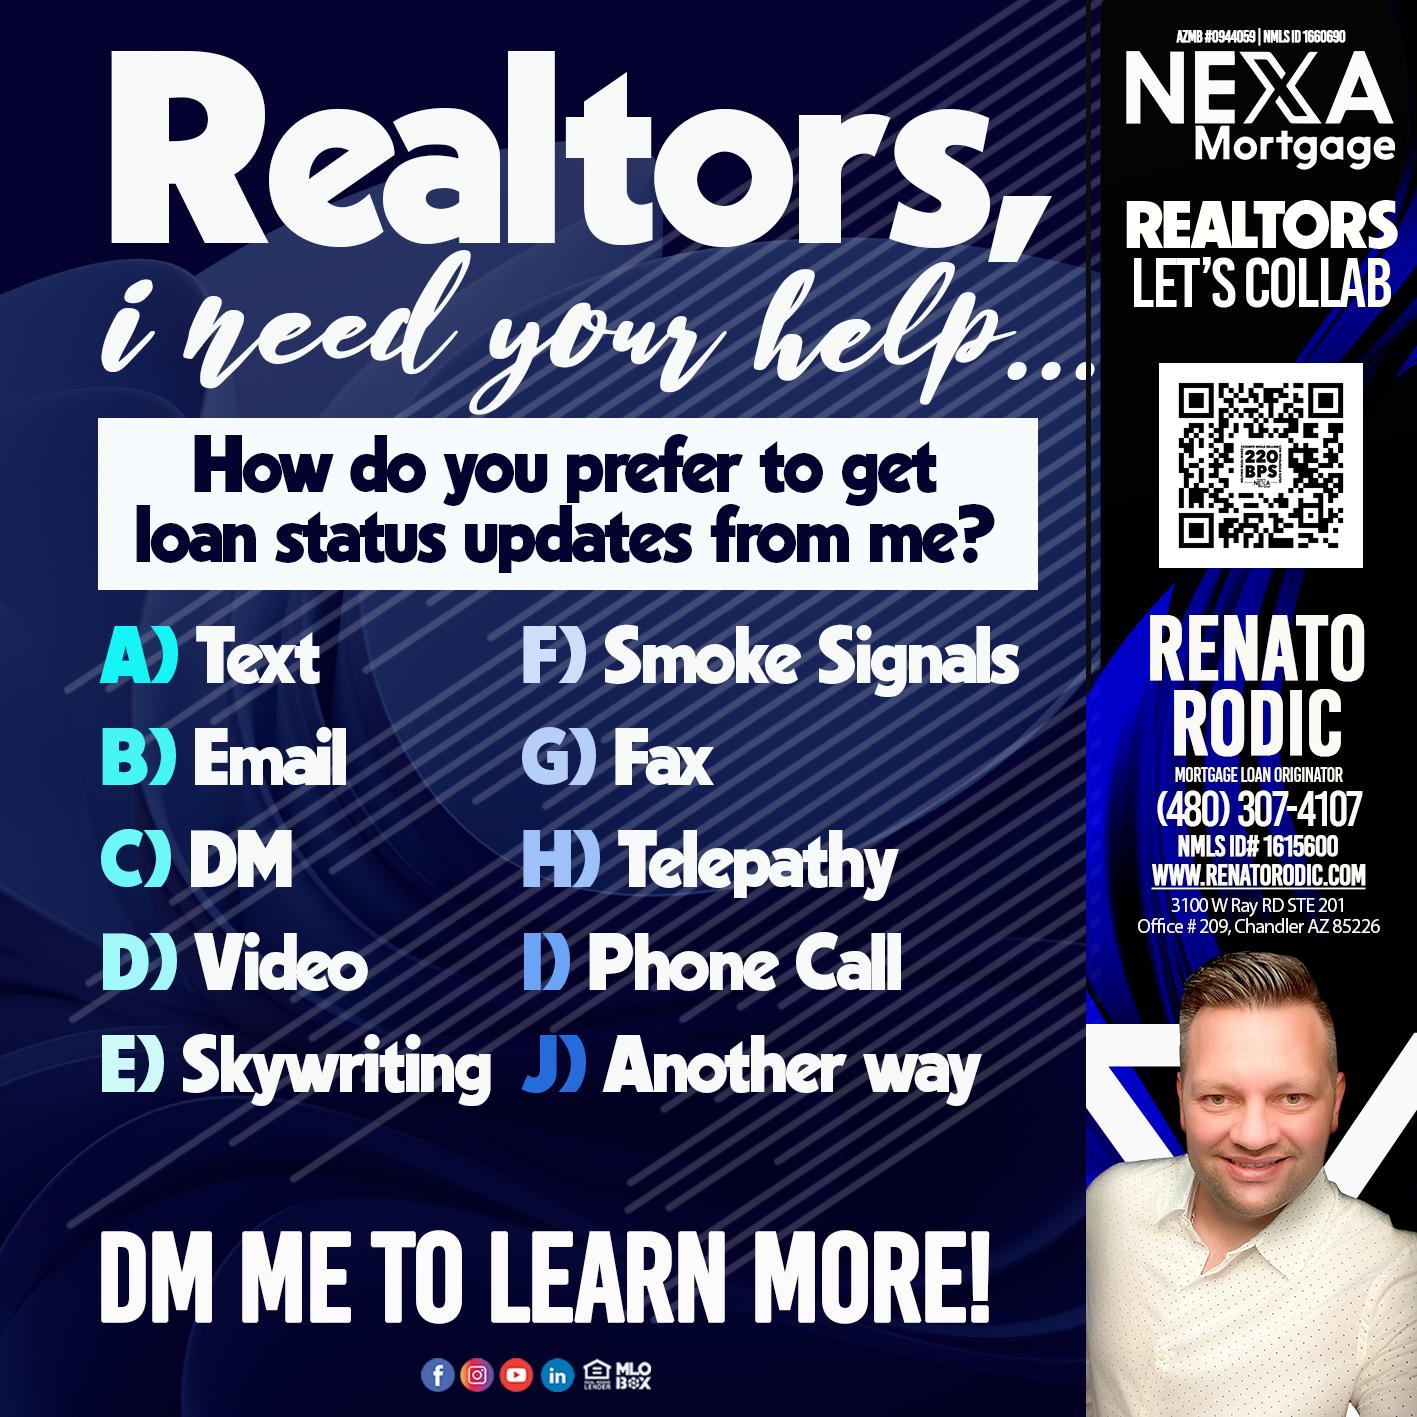 REALTORS LET´S COLLAB - Renato Rodic -Mortgage Loan Originator